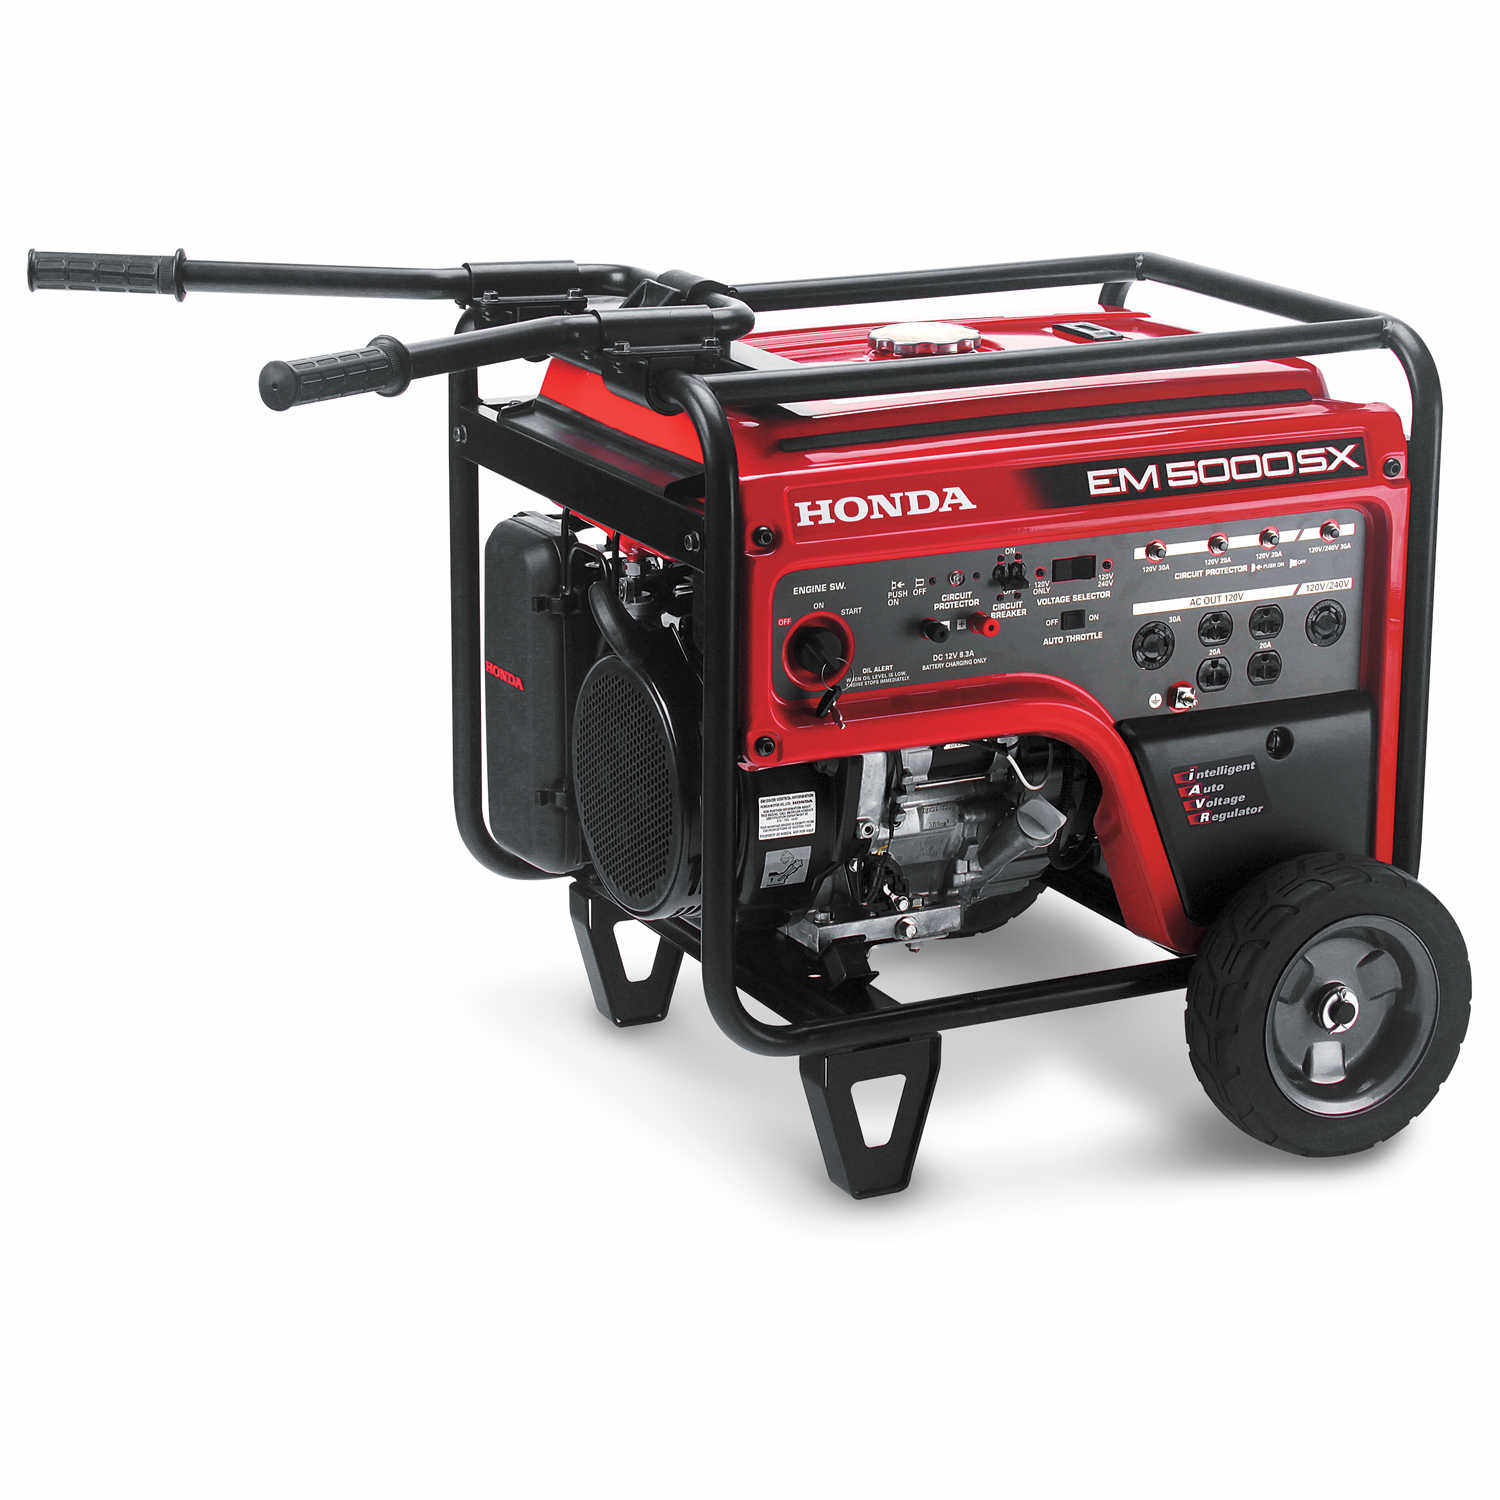 Honda generator em5000sx price #7